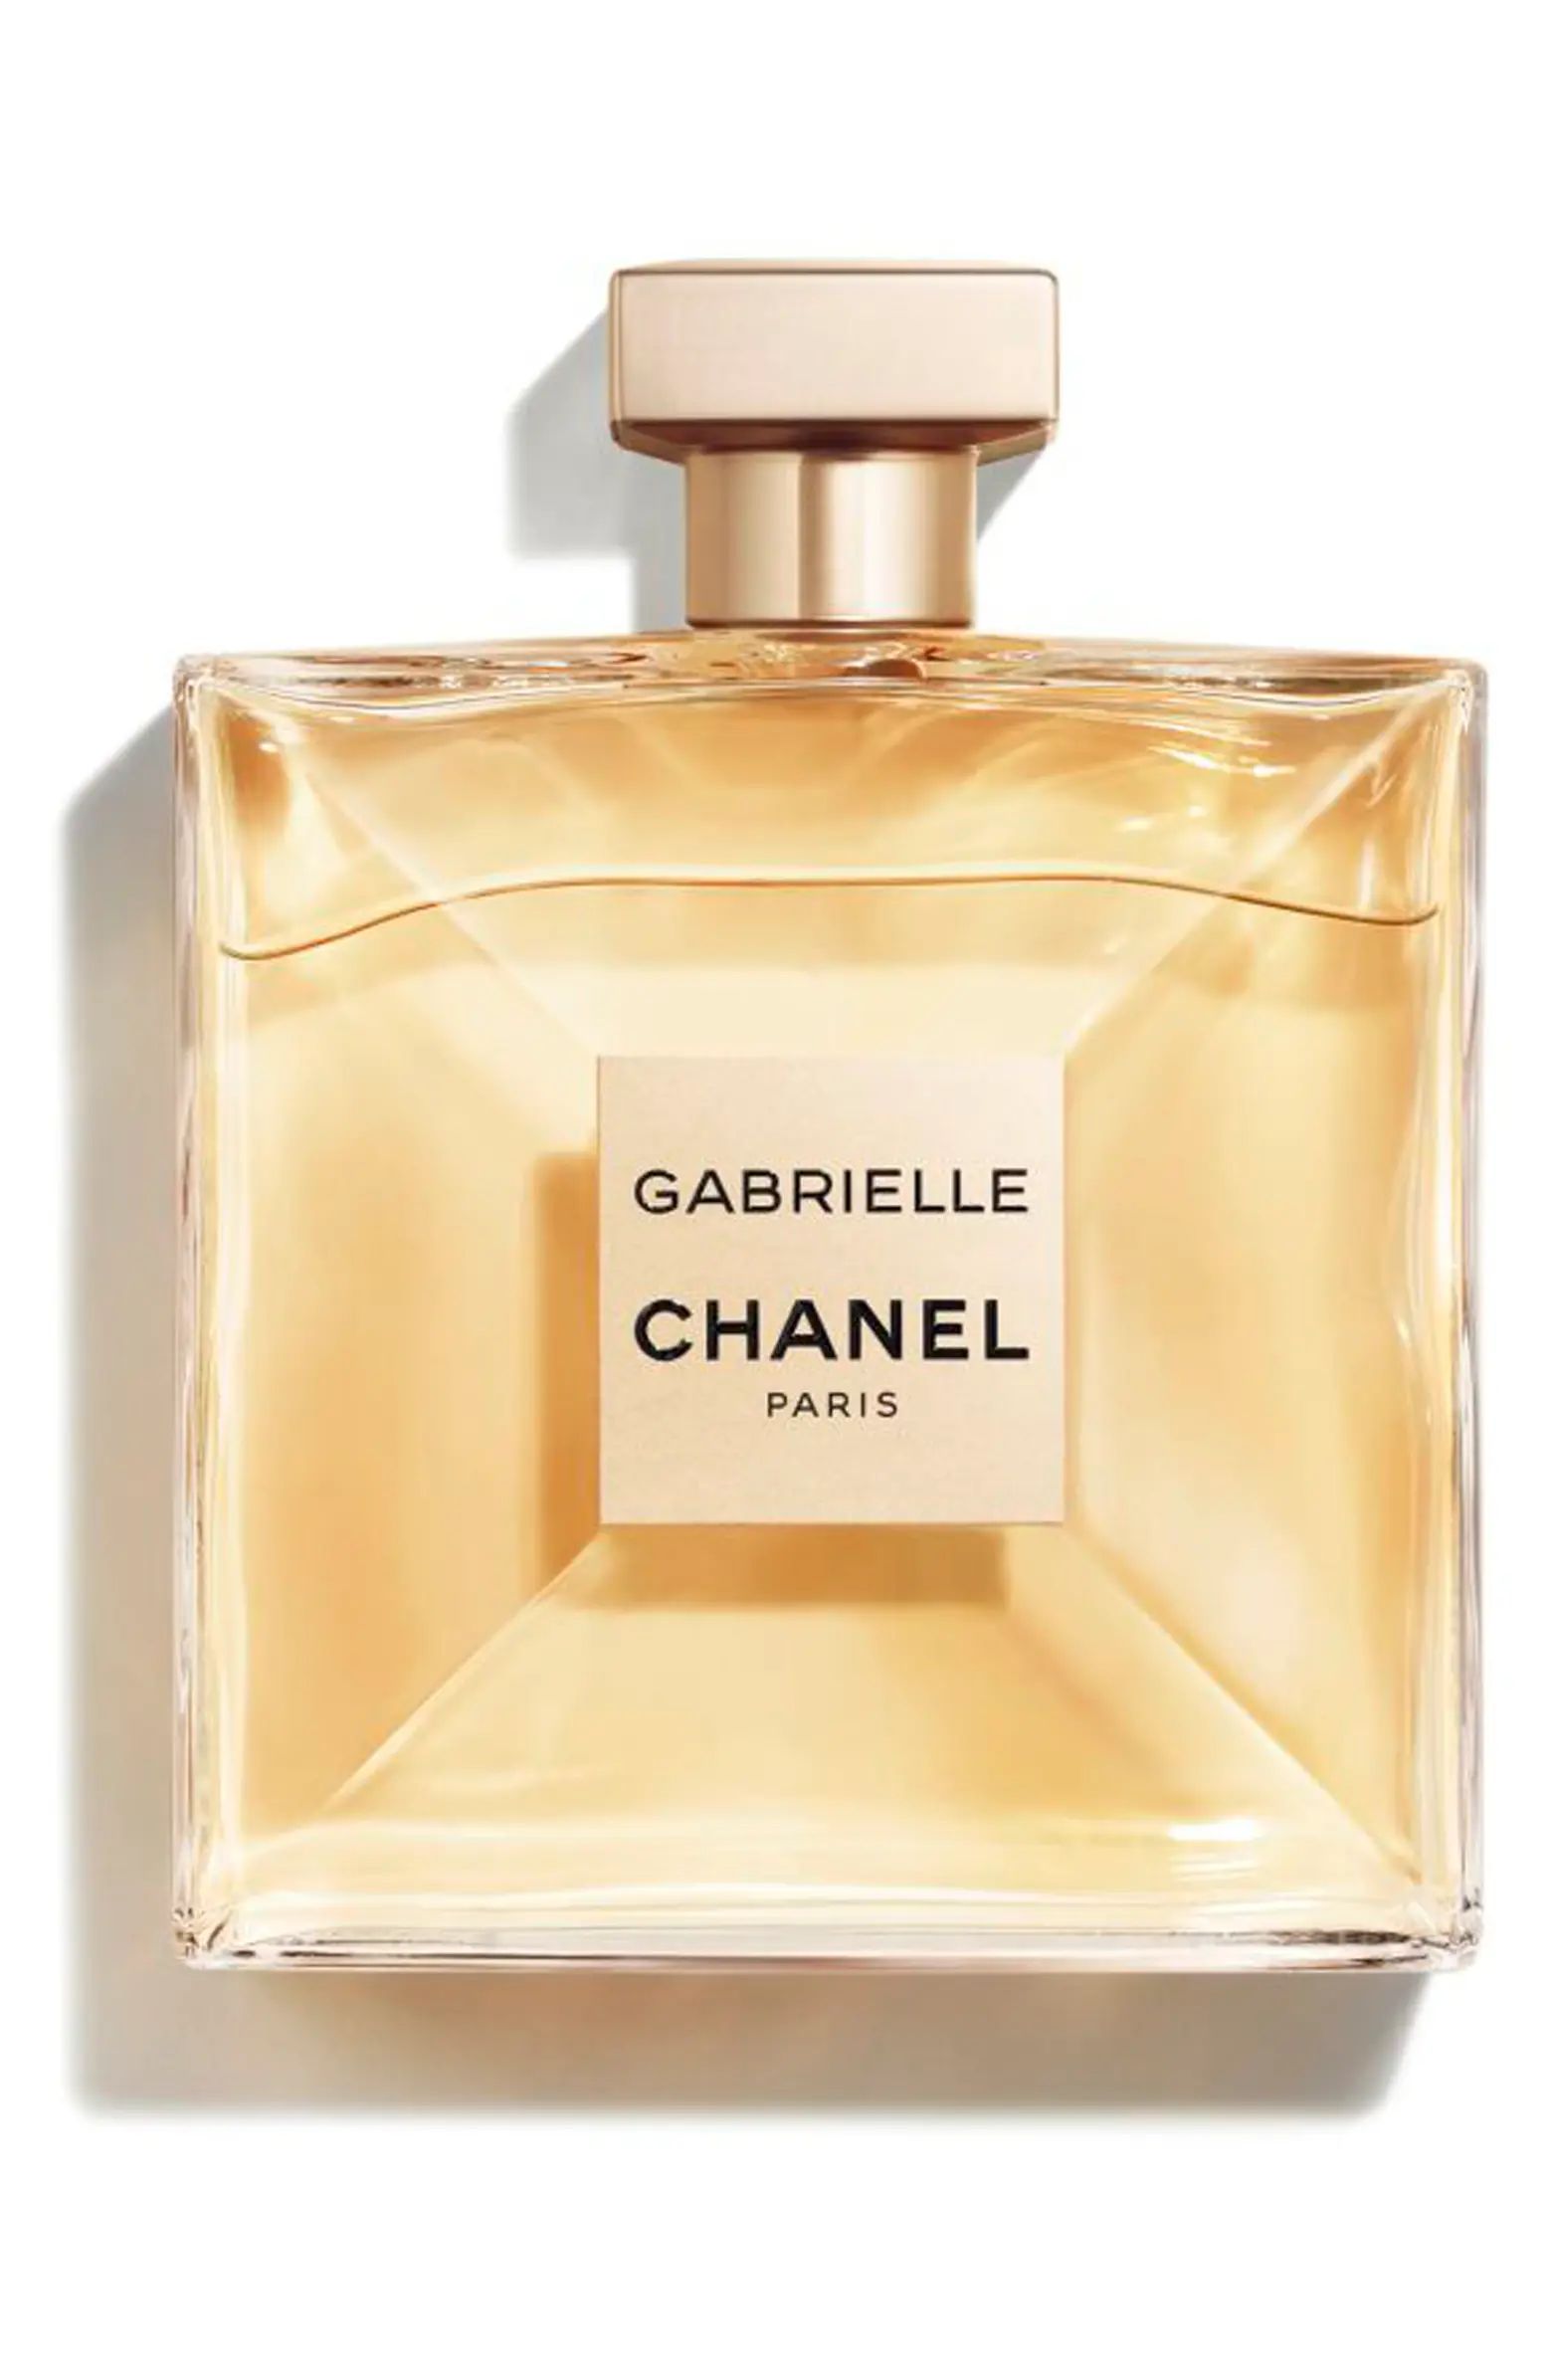 CHANEL GABRIELLE CHANEL Eau de Parfum Spray | Nordstrom | Nordstrom